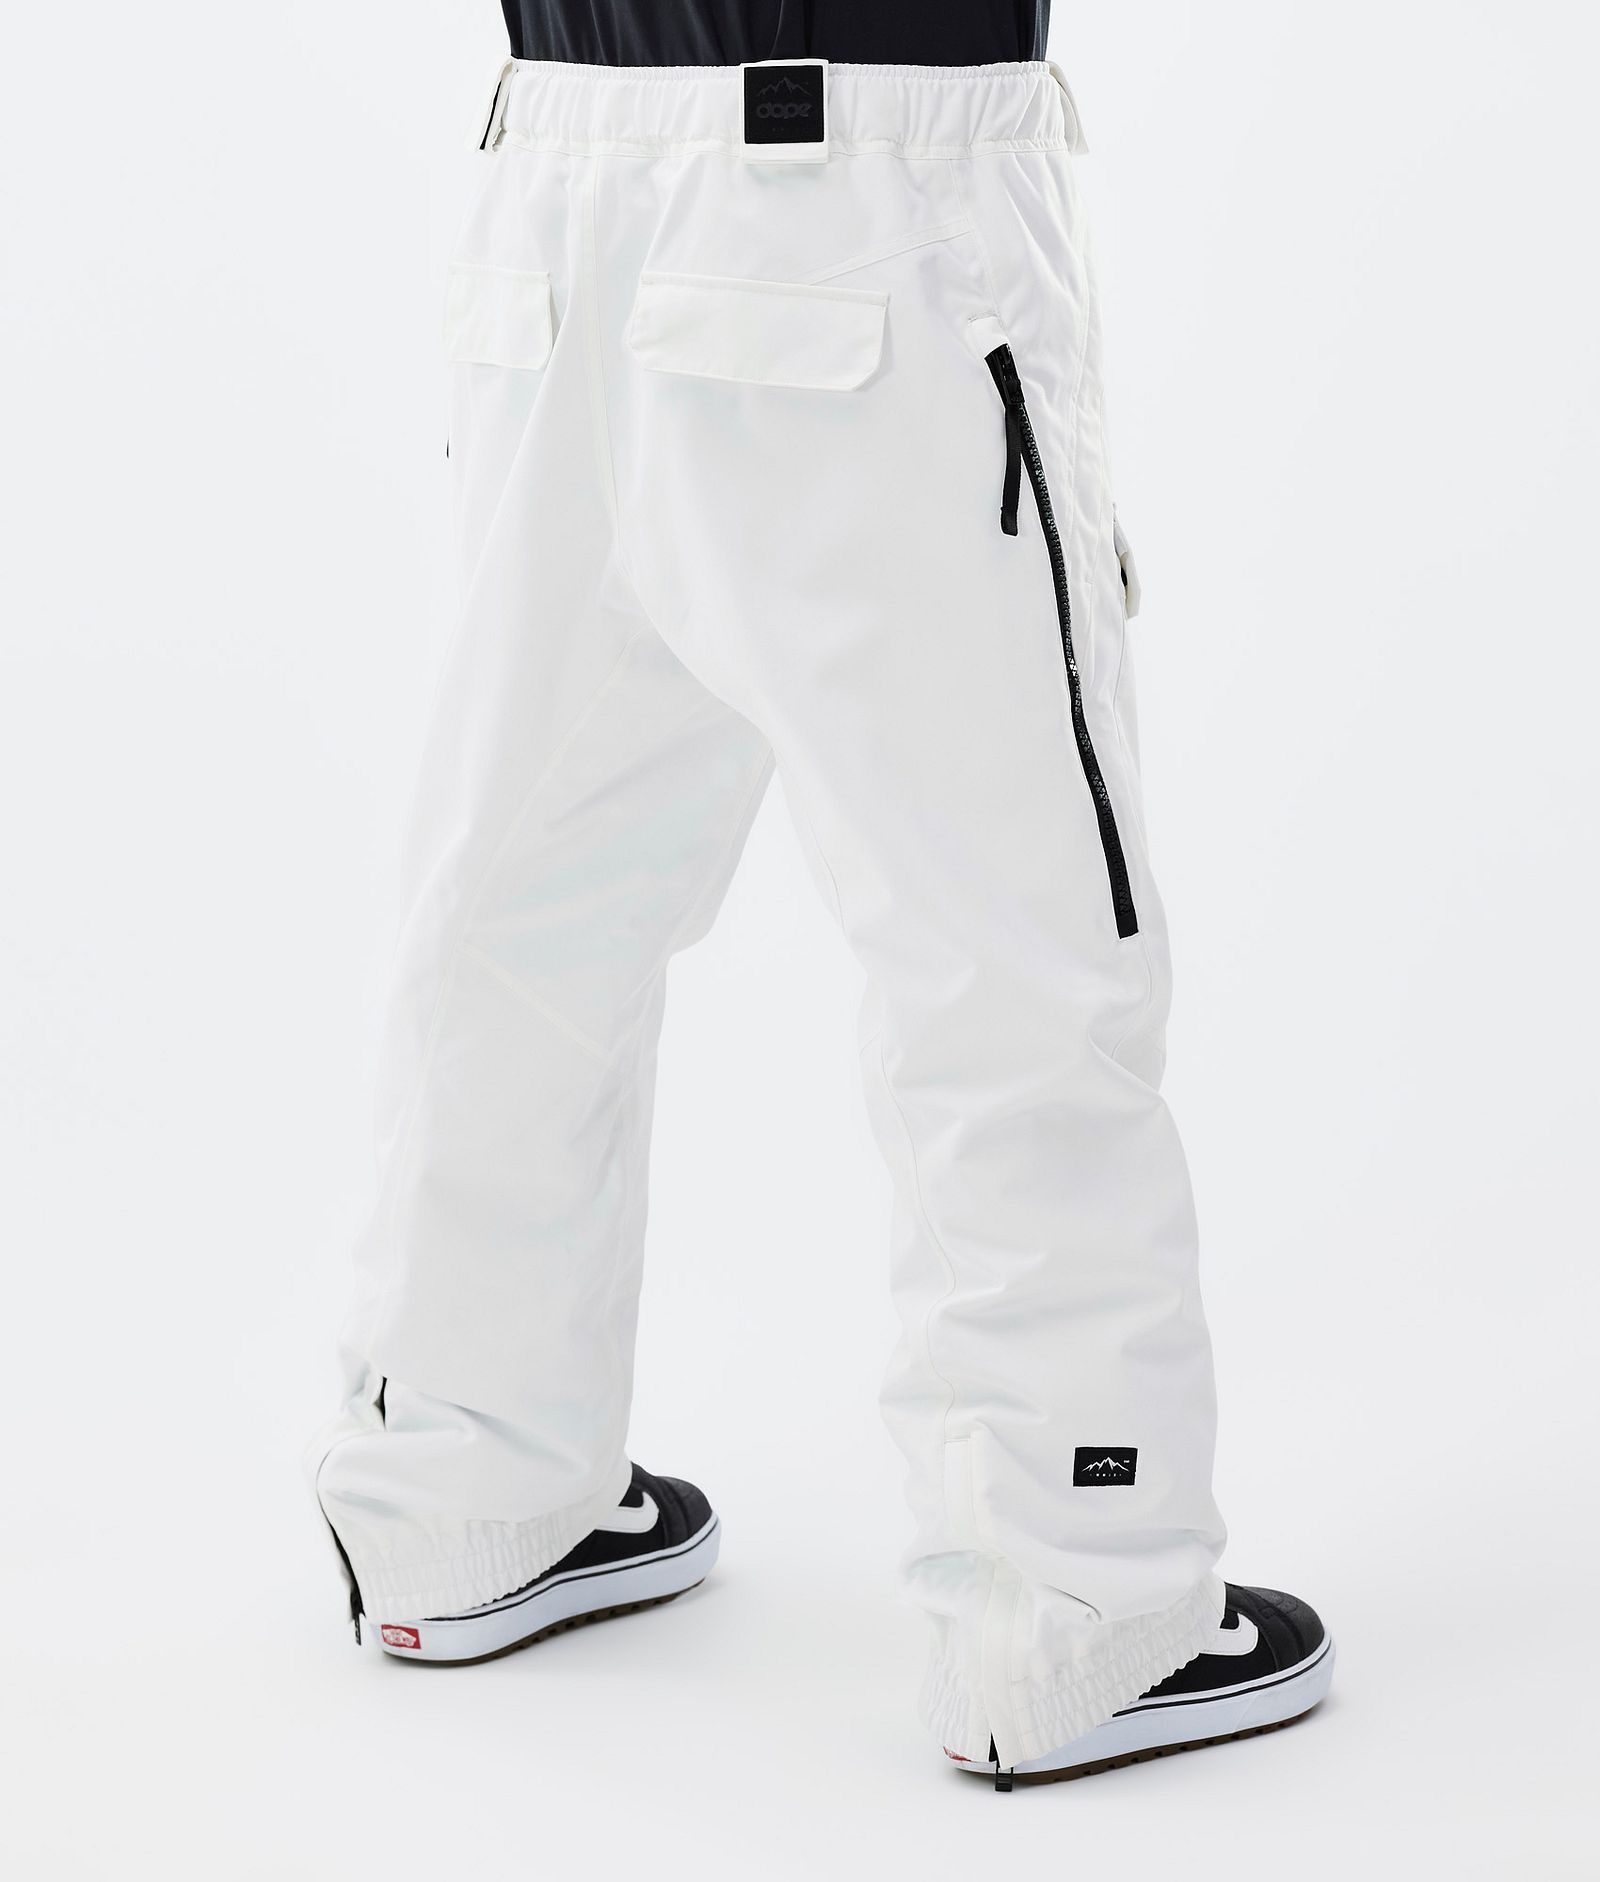 Antek Pantaloni Snowboard Uomo Old White, Immagine 4 di 7